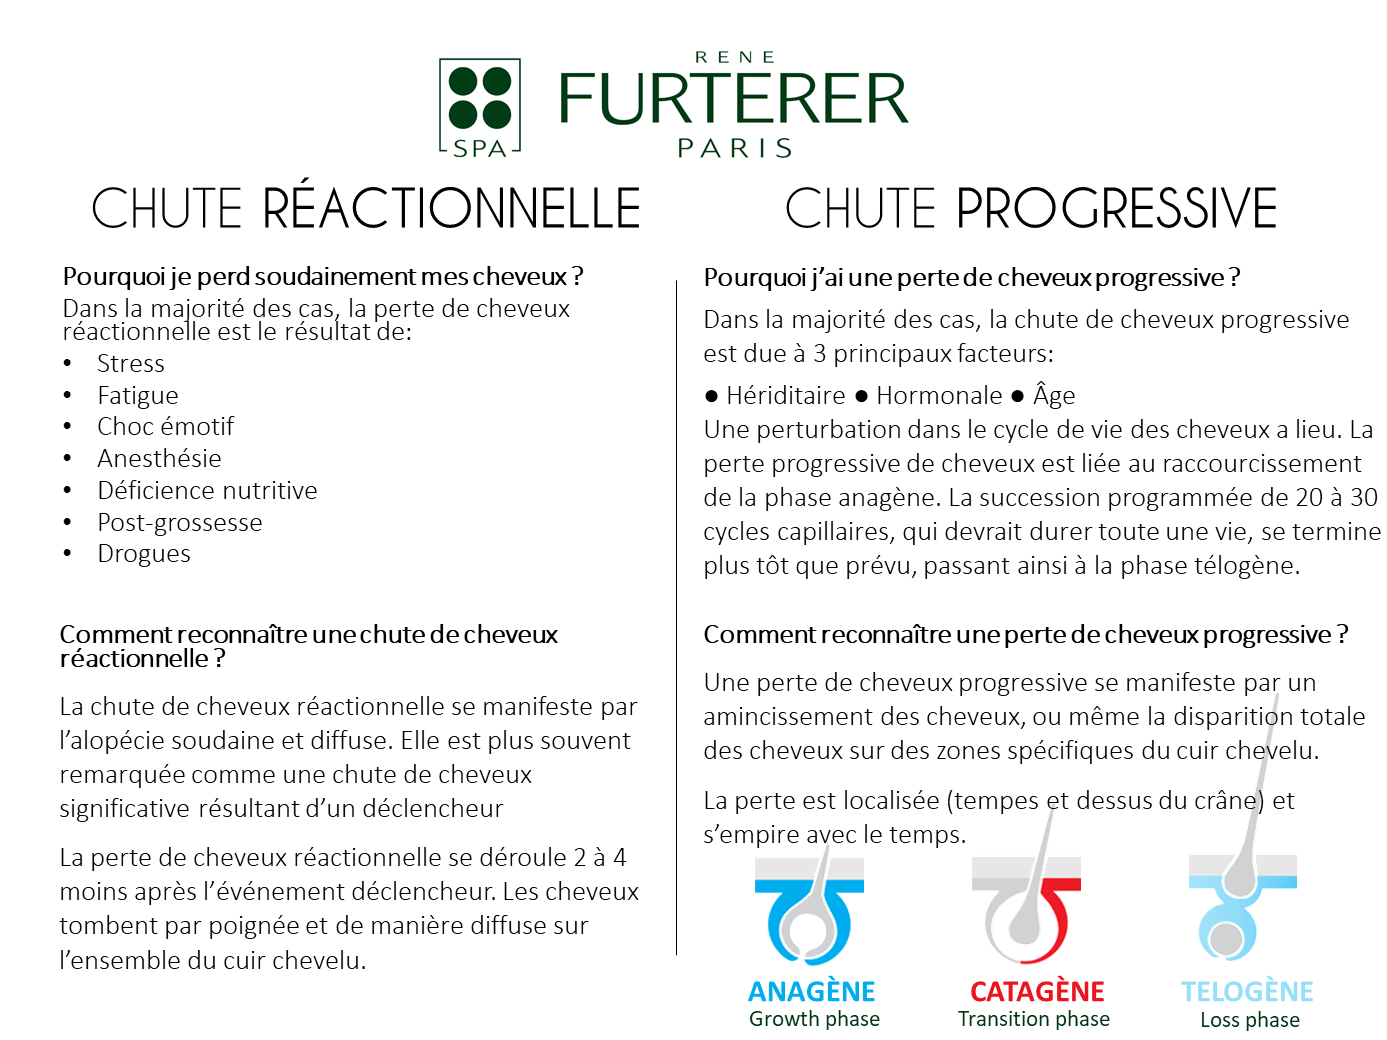 VITALFAN traitement antichute progressive 30 capsules- René Furterer - 53 Karat